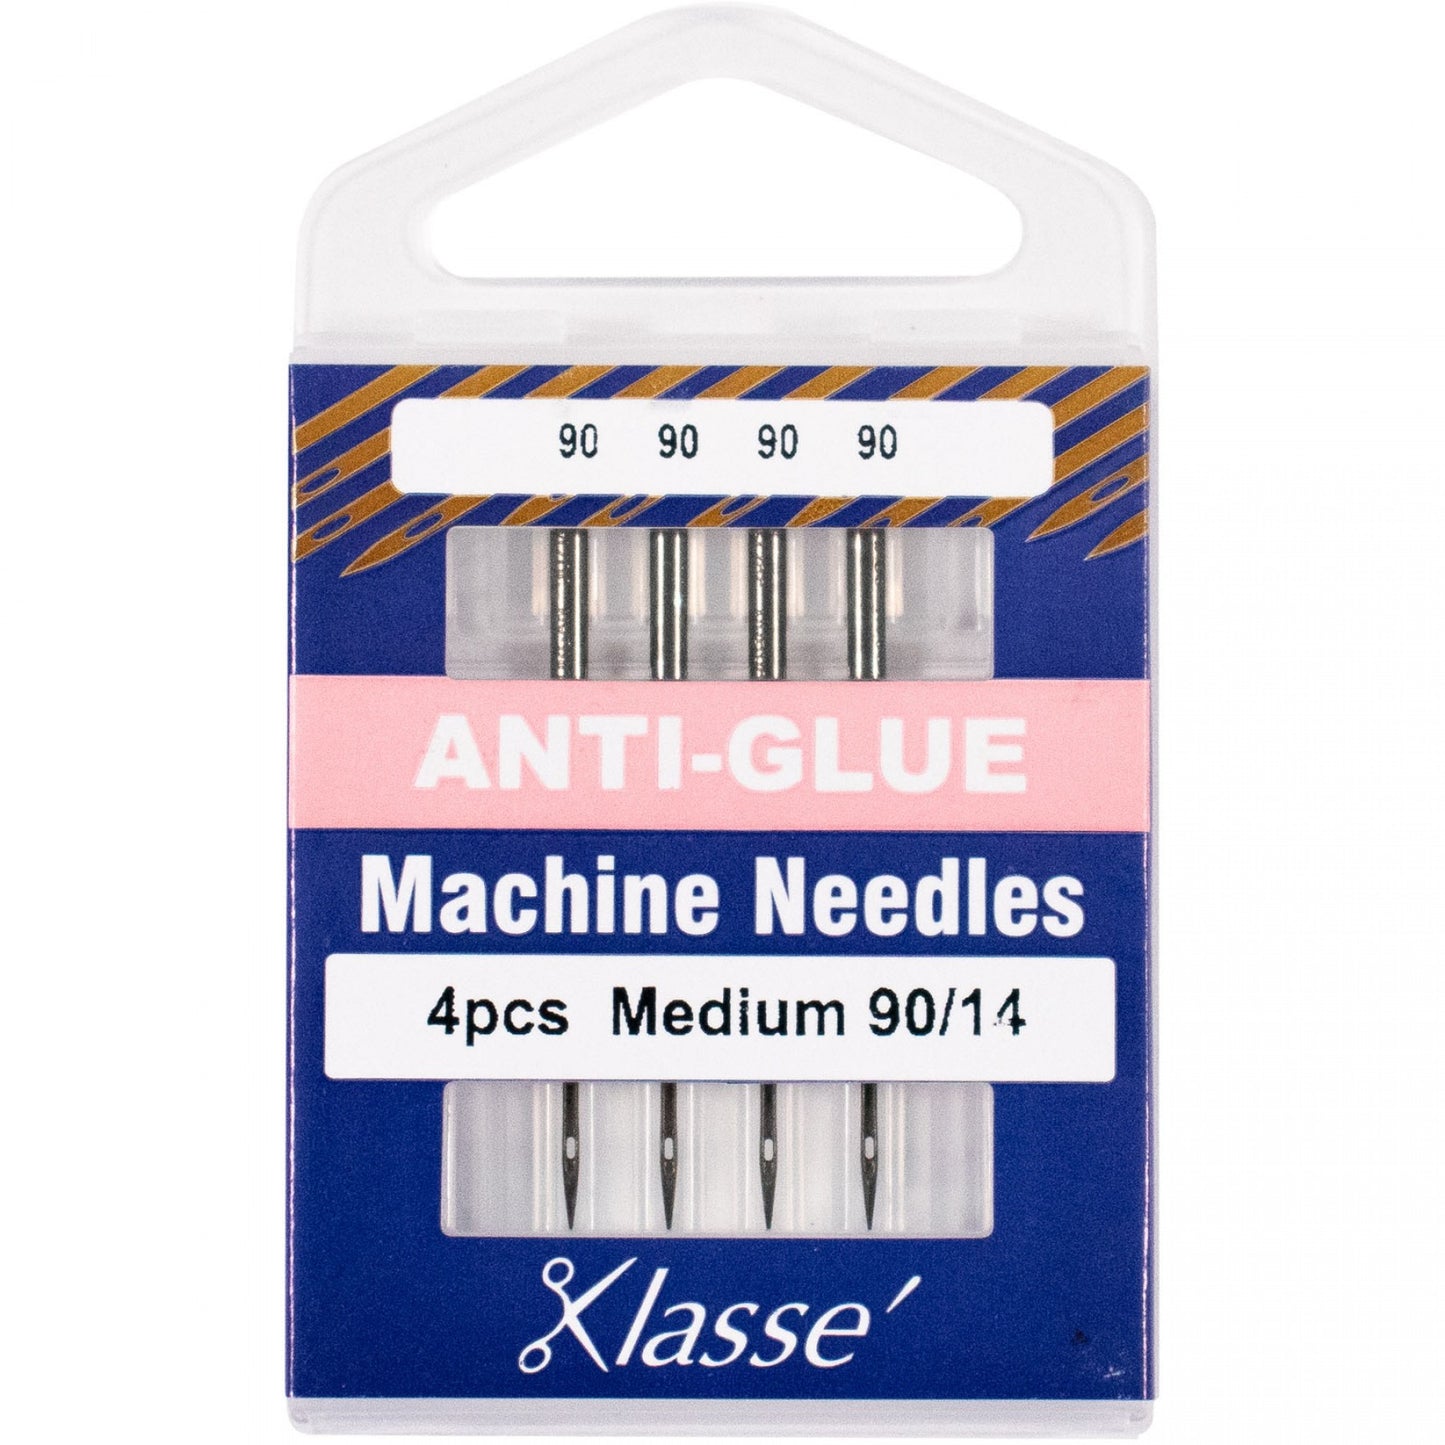 Anti Glue 90/14 Needles